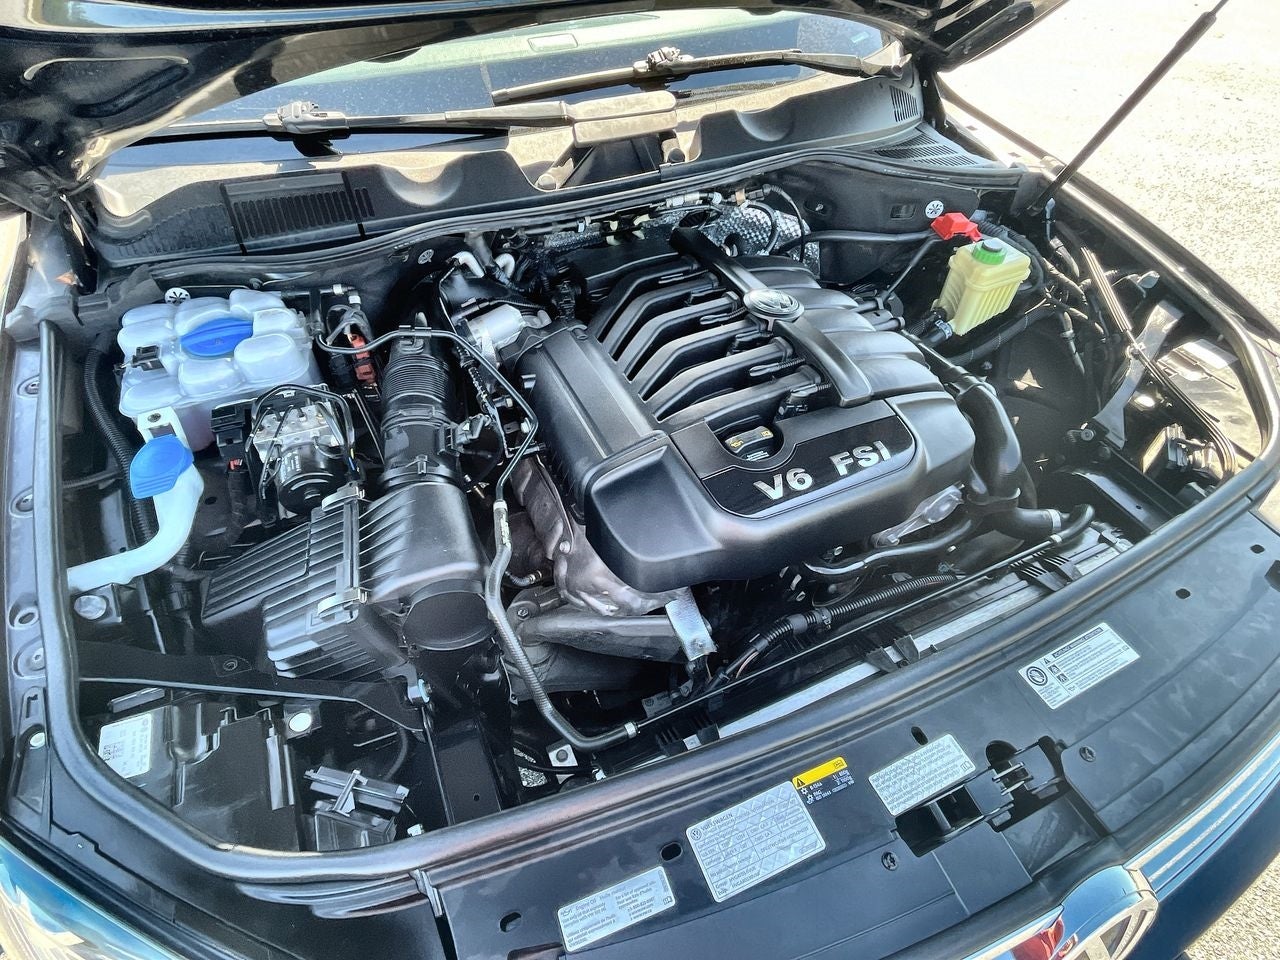 2017 Volkswagen Touareg V6 Wolfsburg Edition